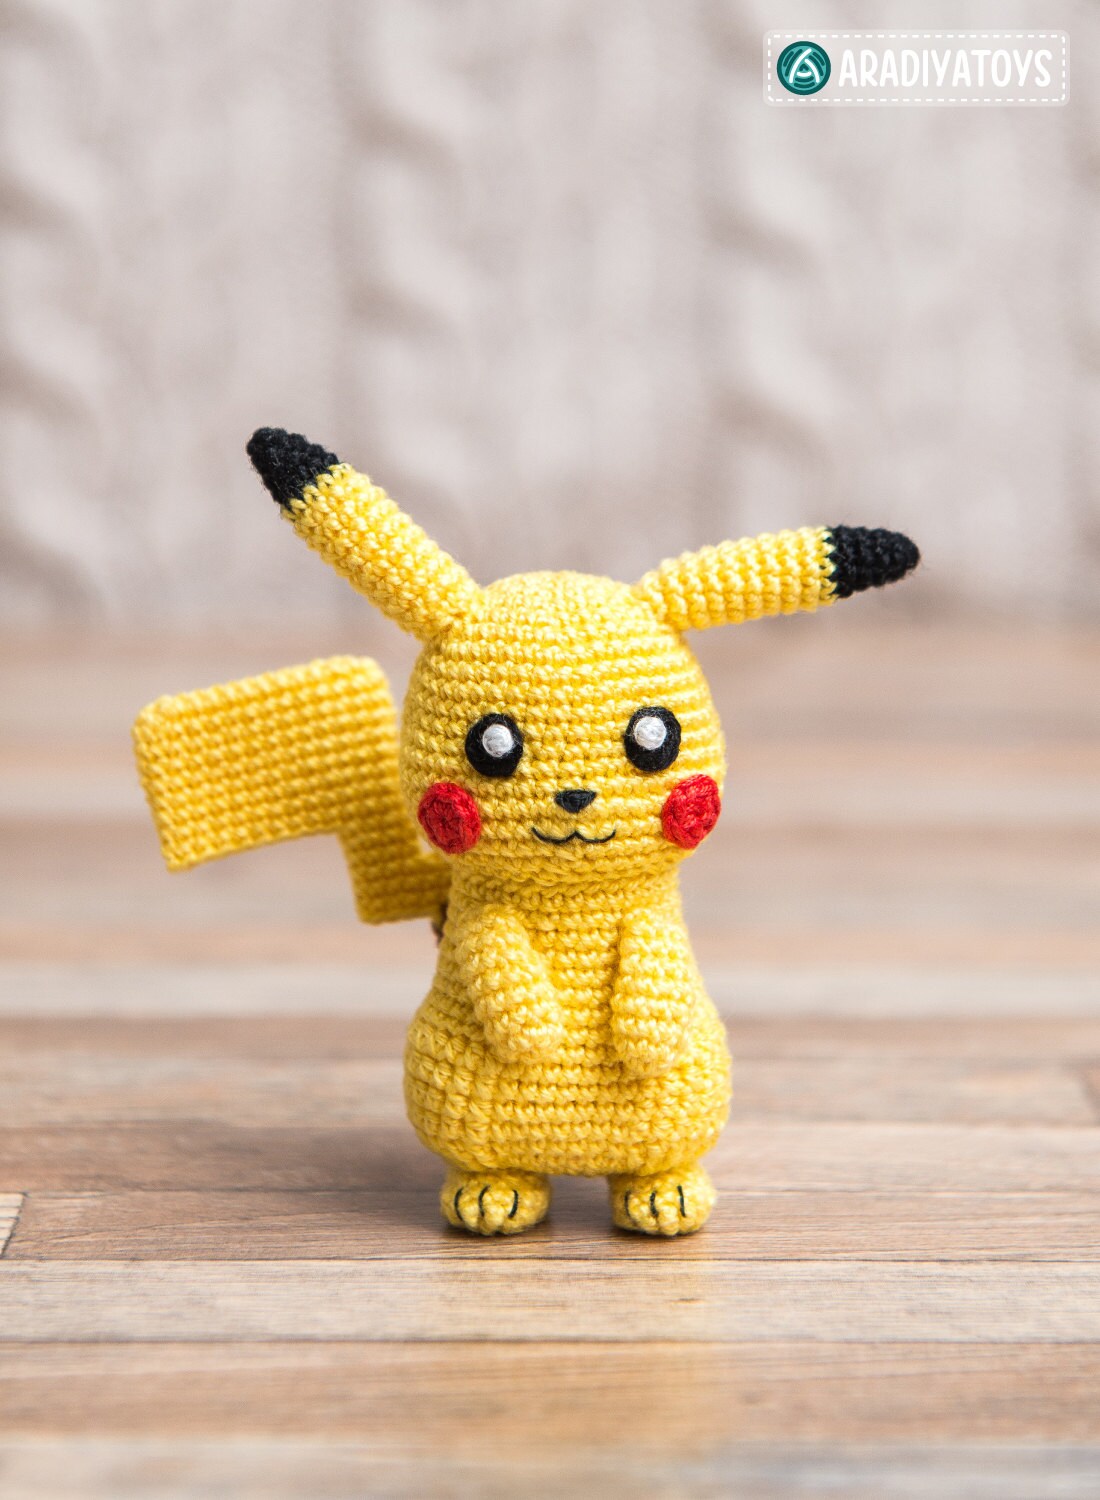 Crochet Pattern of Pikachu from Pokemon Amigurumi